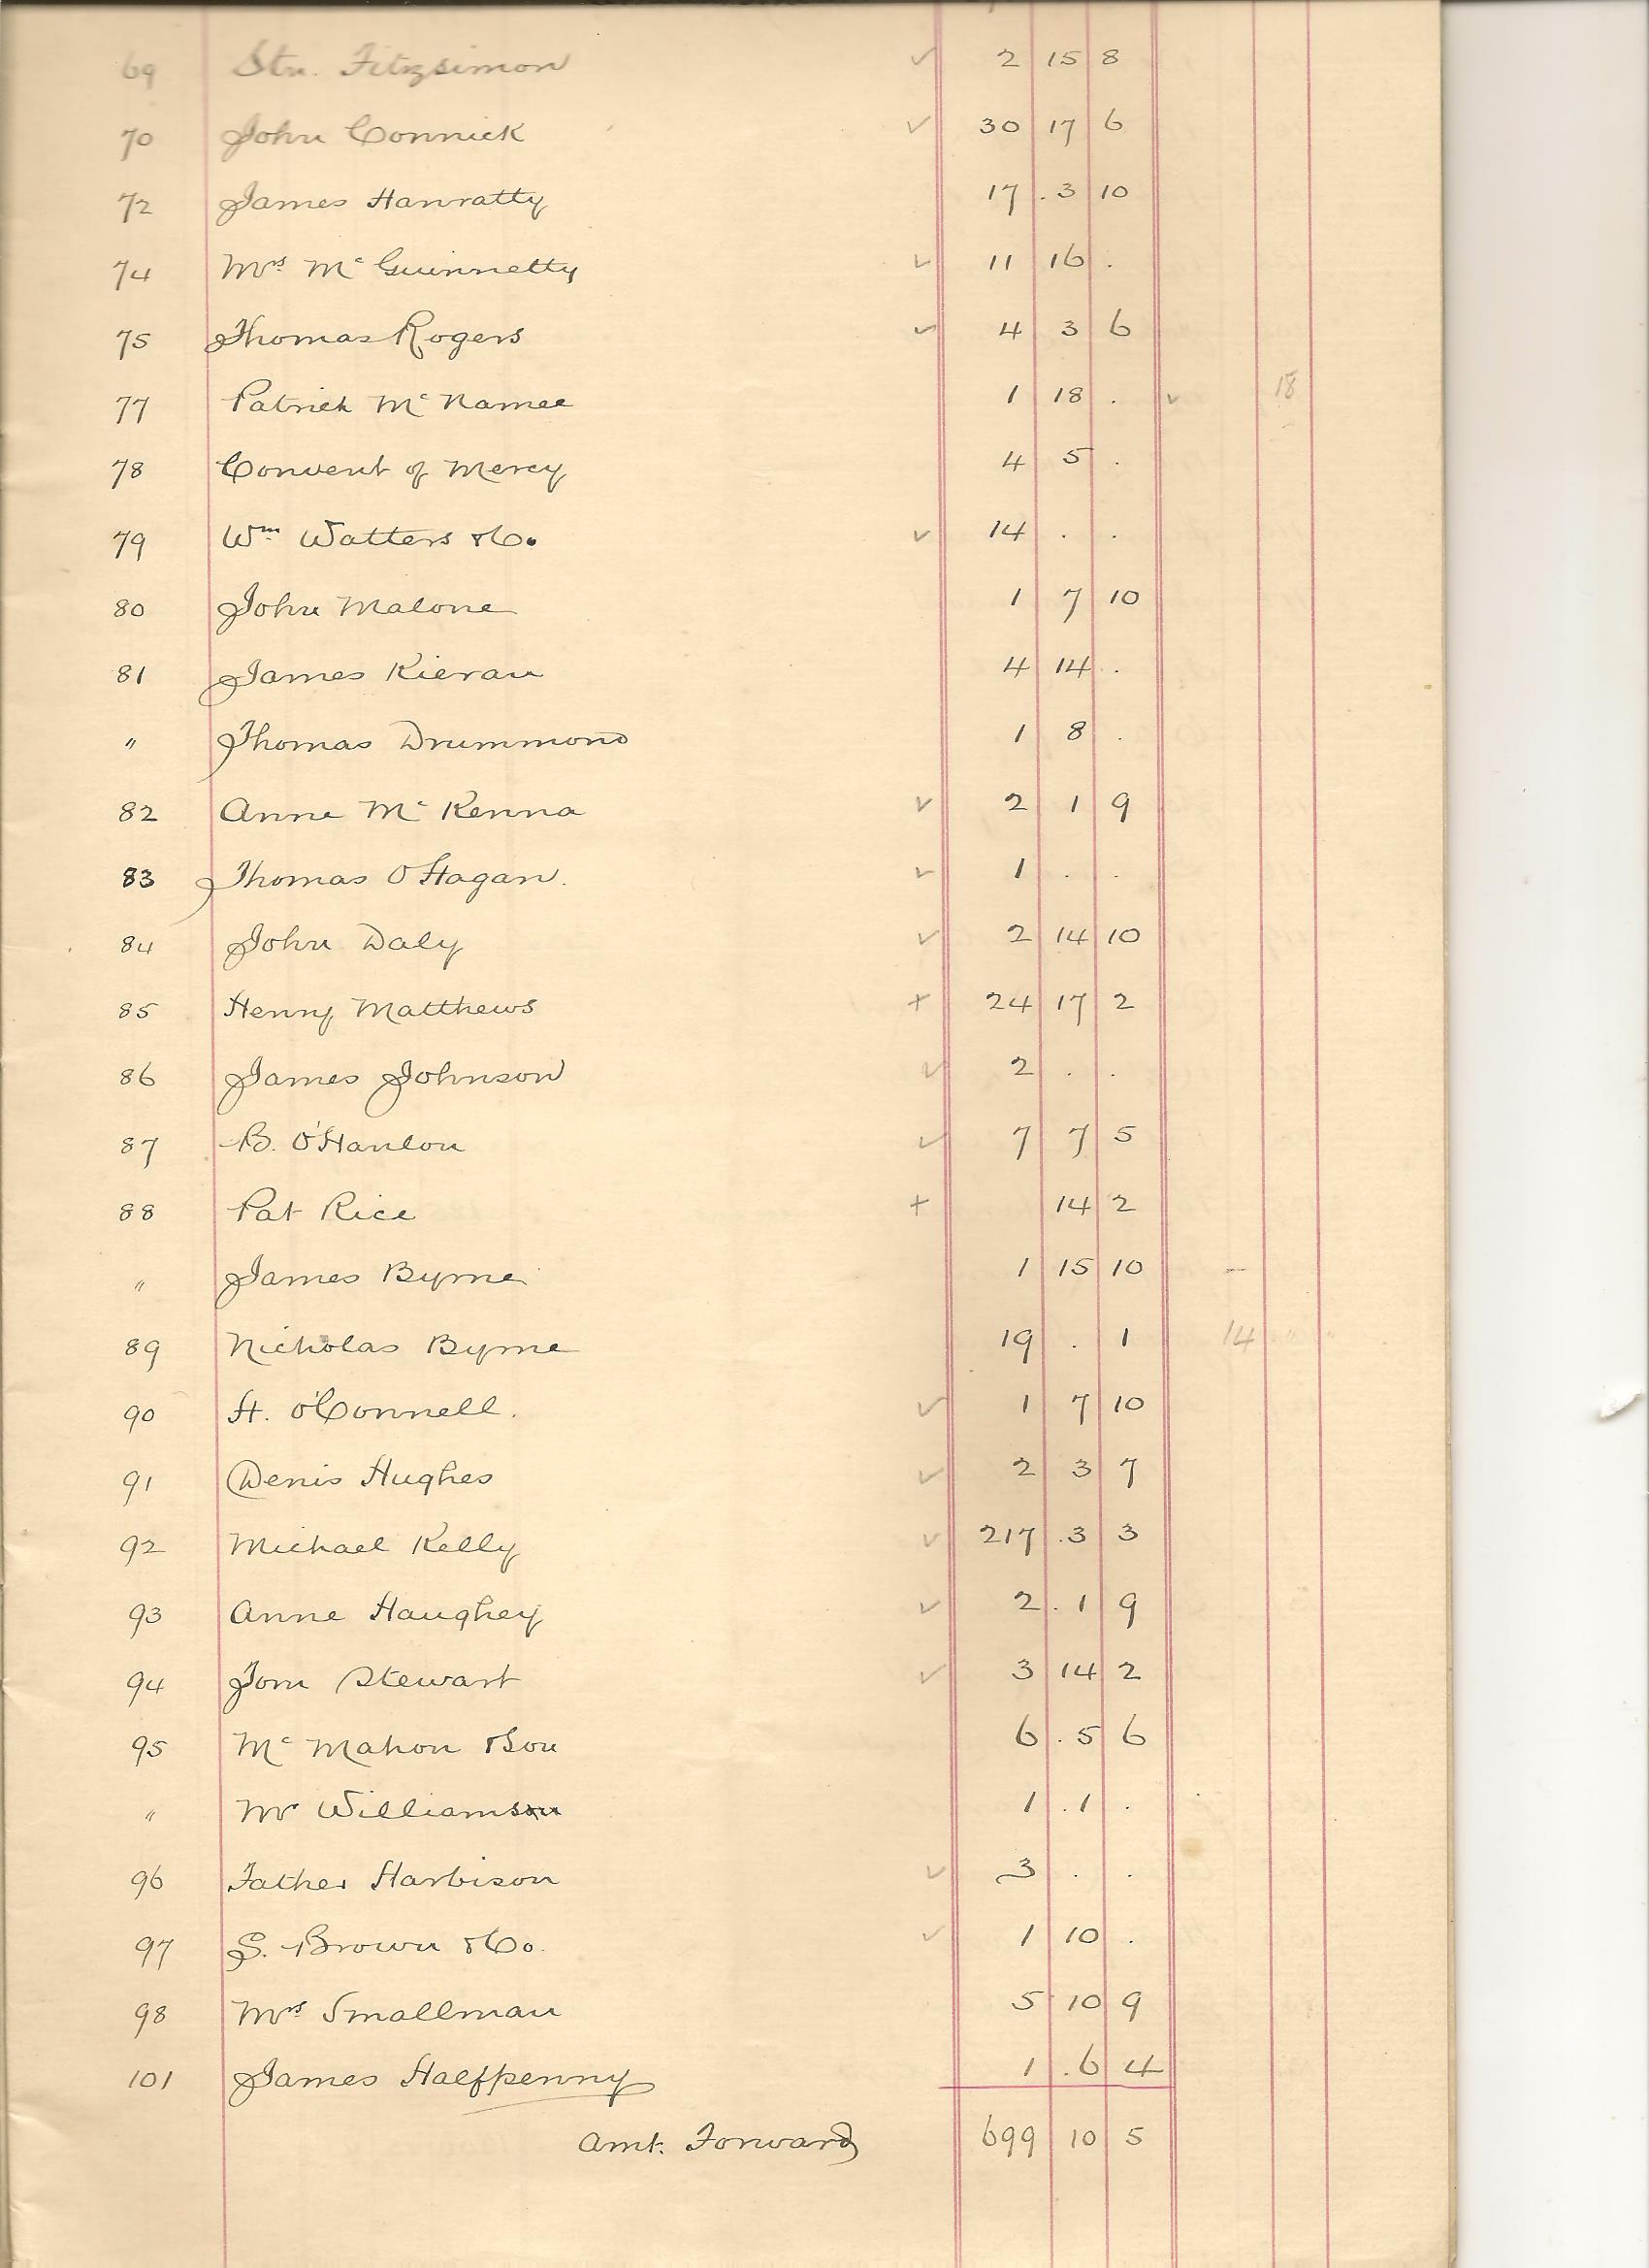 Macardle Moore - Accounts - Feb - 1880